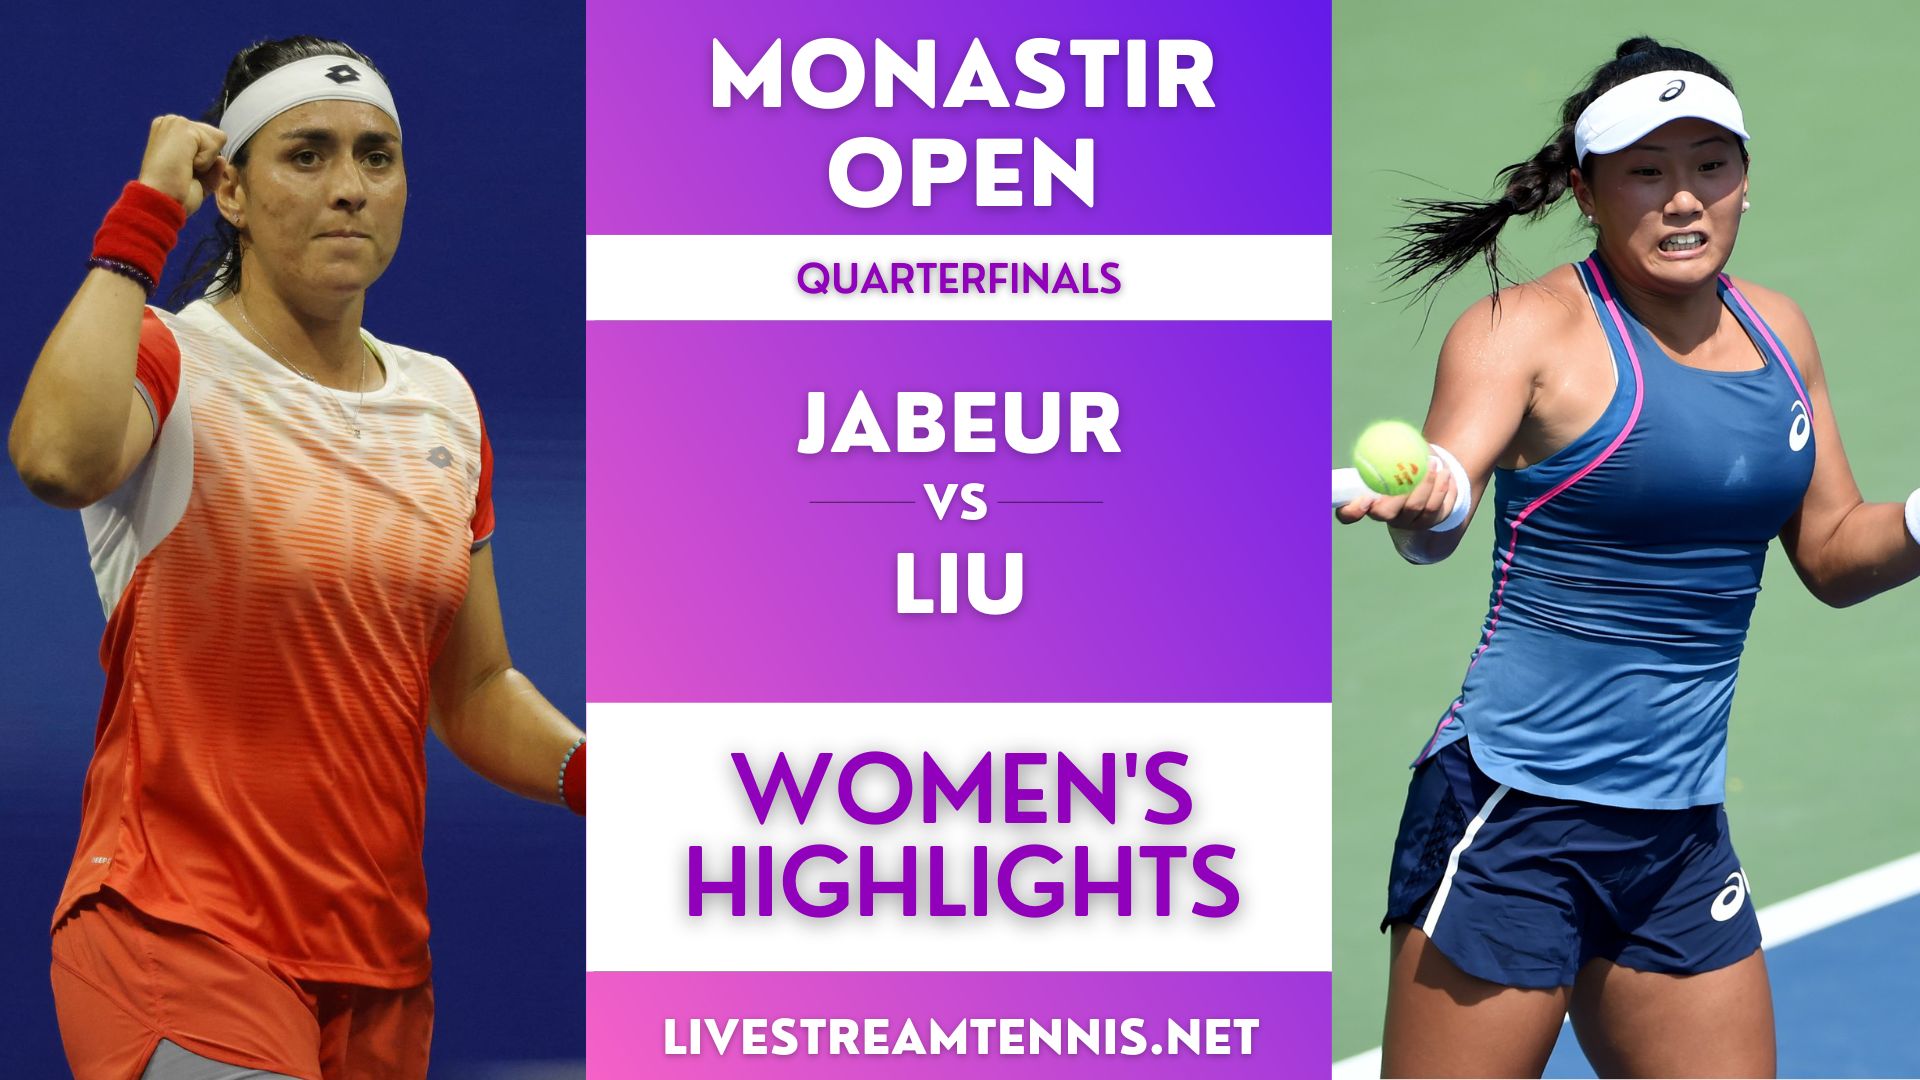 Monastir Open WTA Quarterfinal 2 Highlights 2022